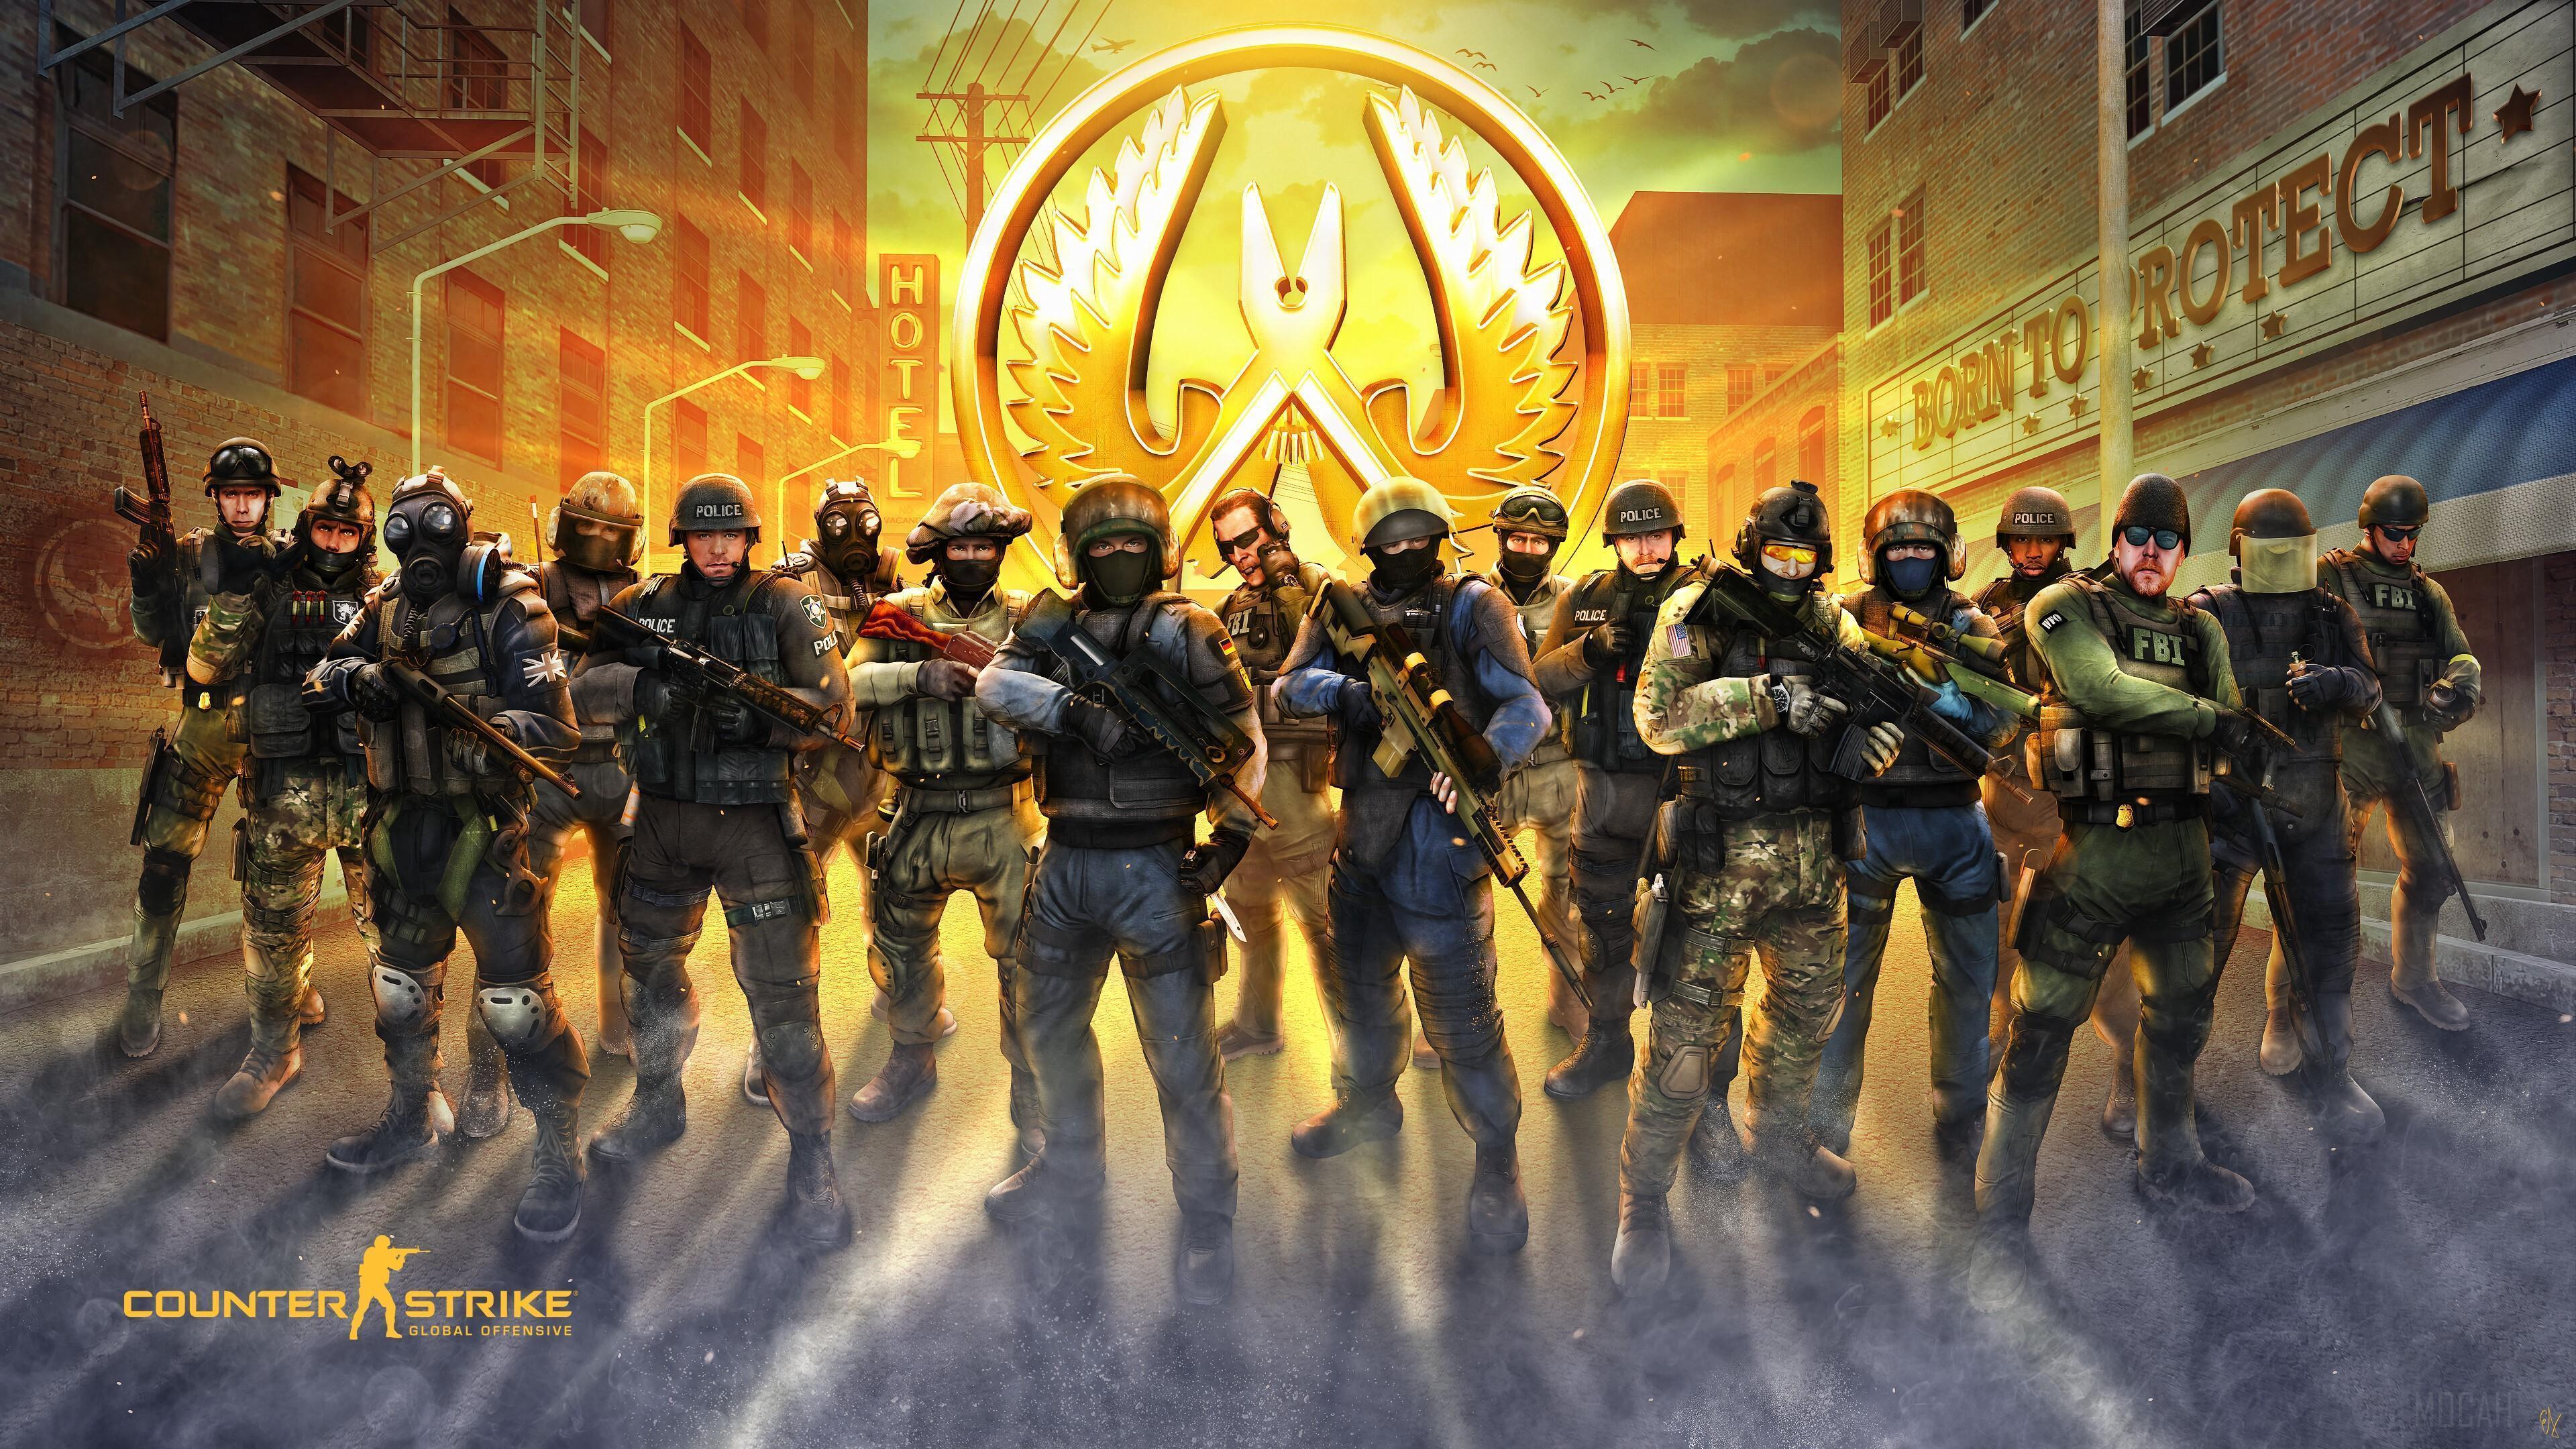 HD wallpaper, Agents 4K, Counter Strike Global Offensive, Csgo, Counter Terrorist, Video Game